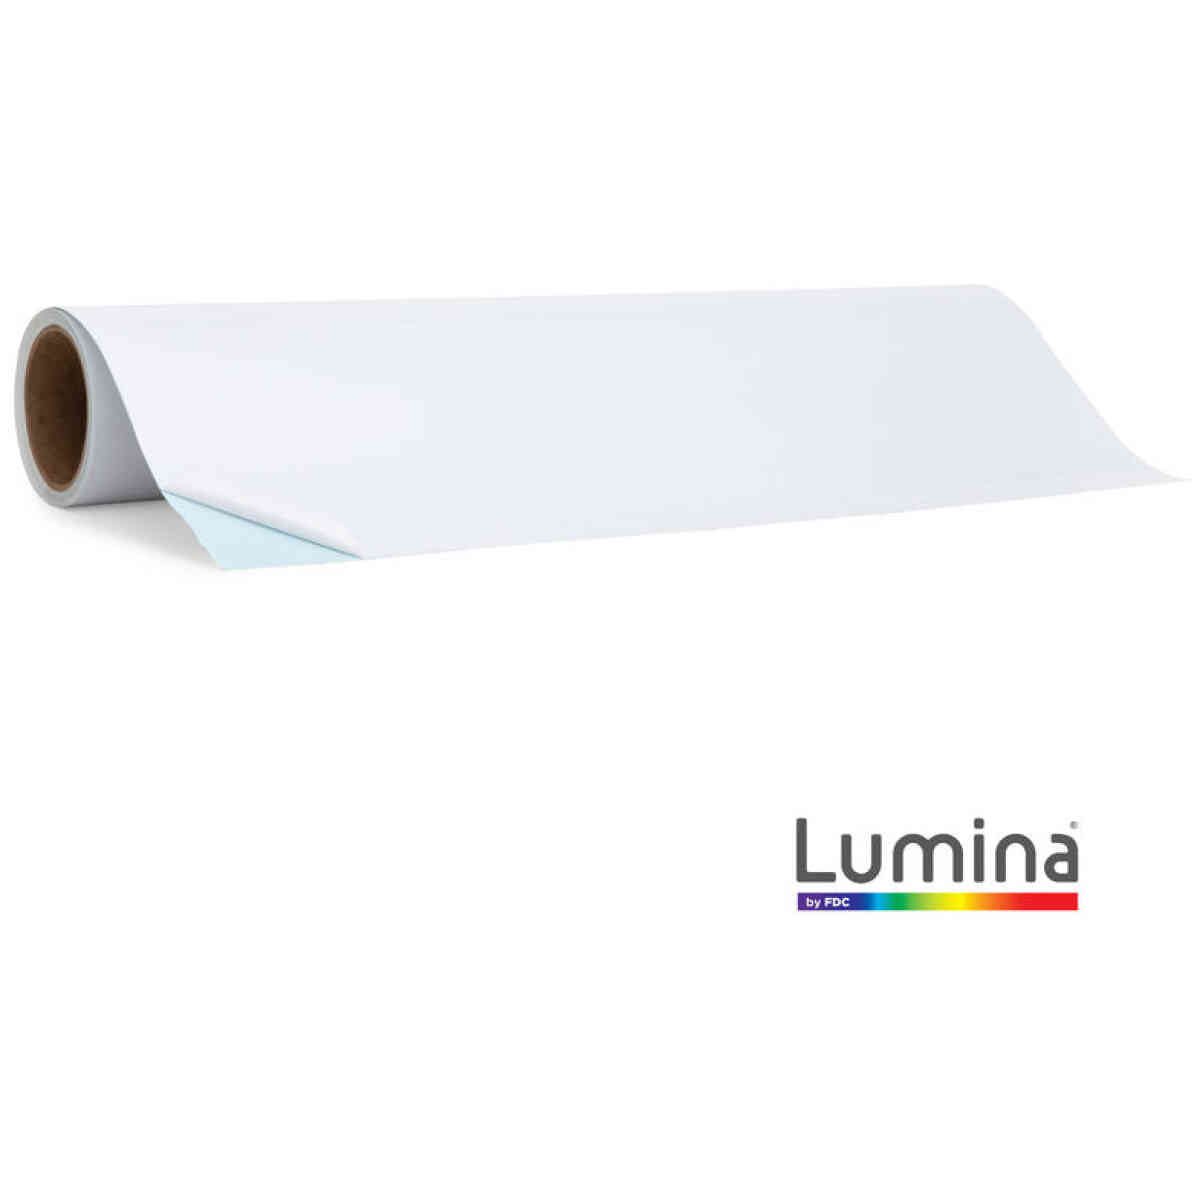 Lumina By Fdc 4305 Promotional Dry Erase Vinyl Film FDC®